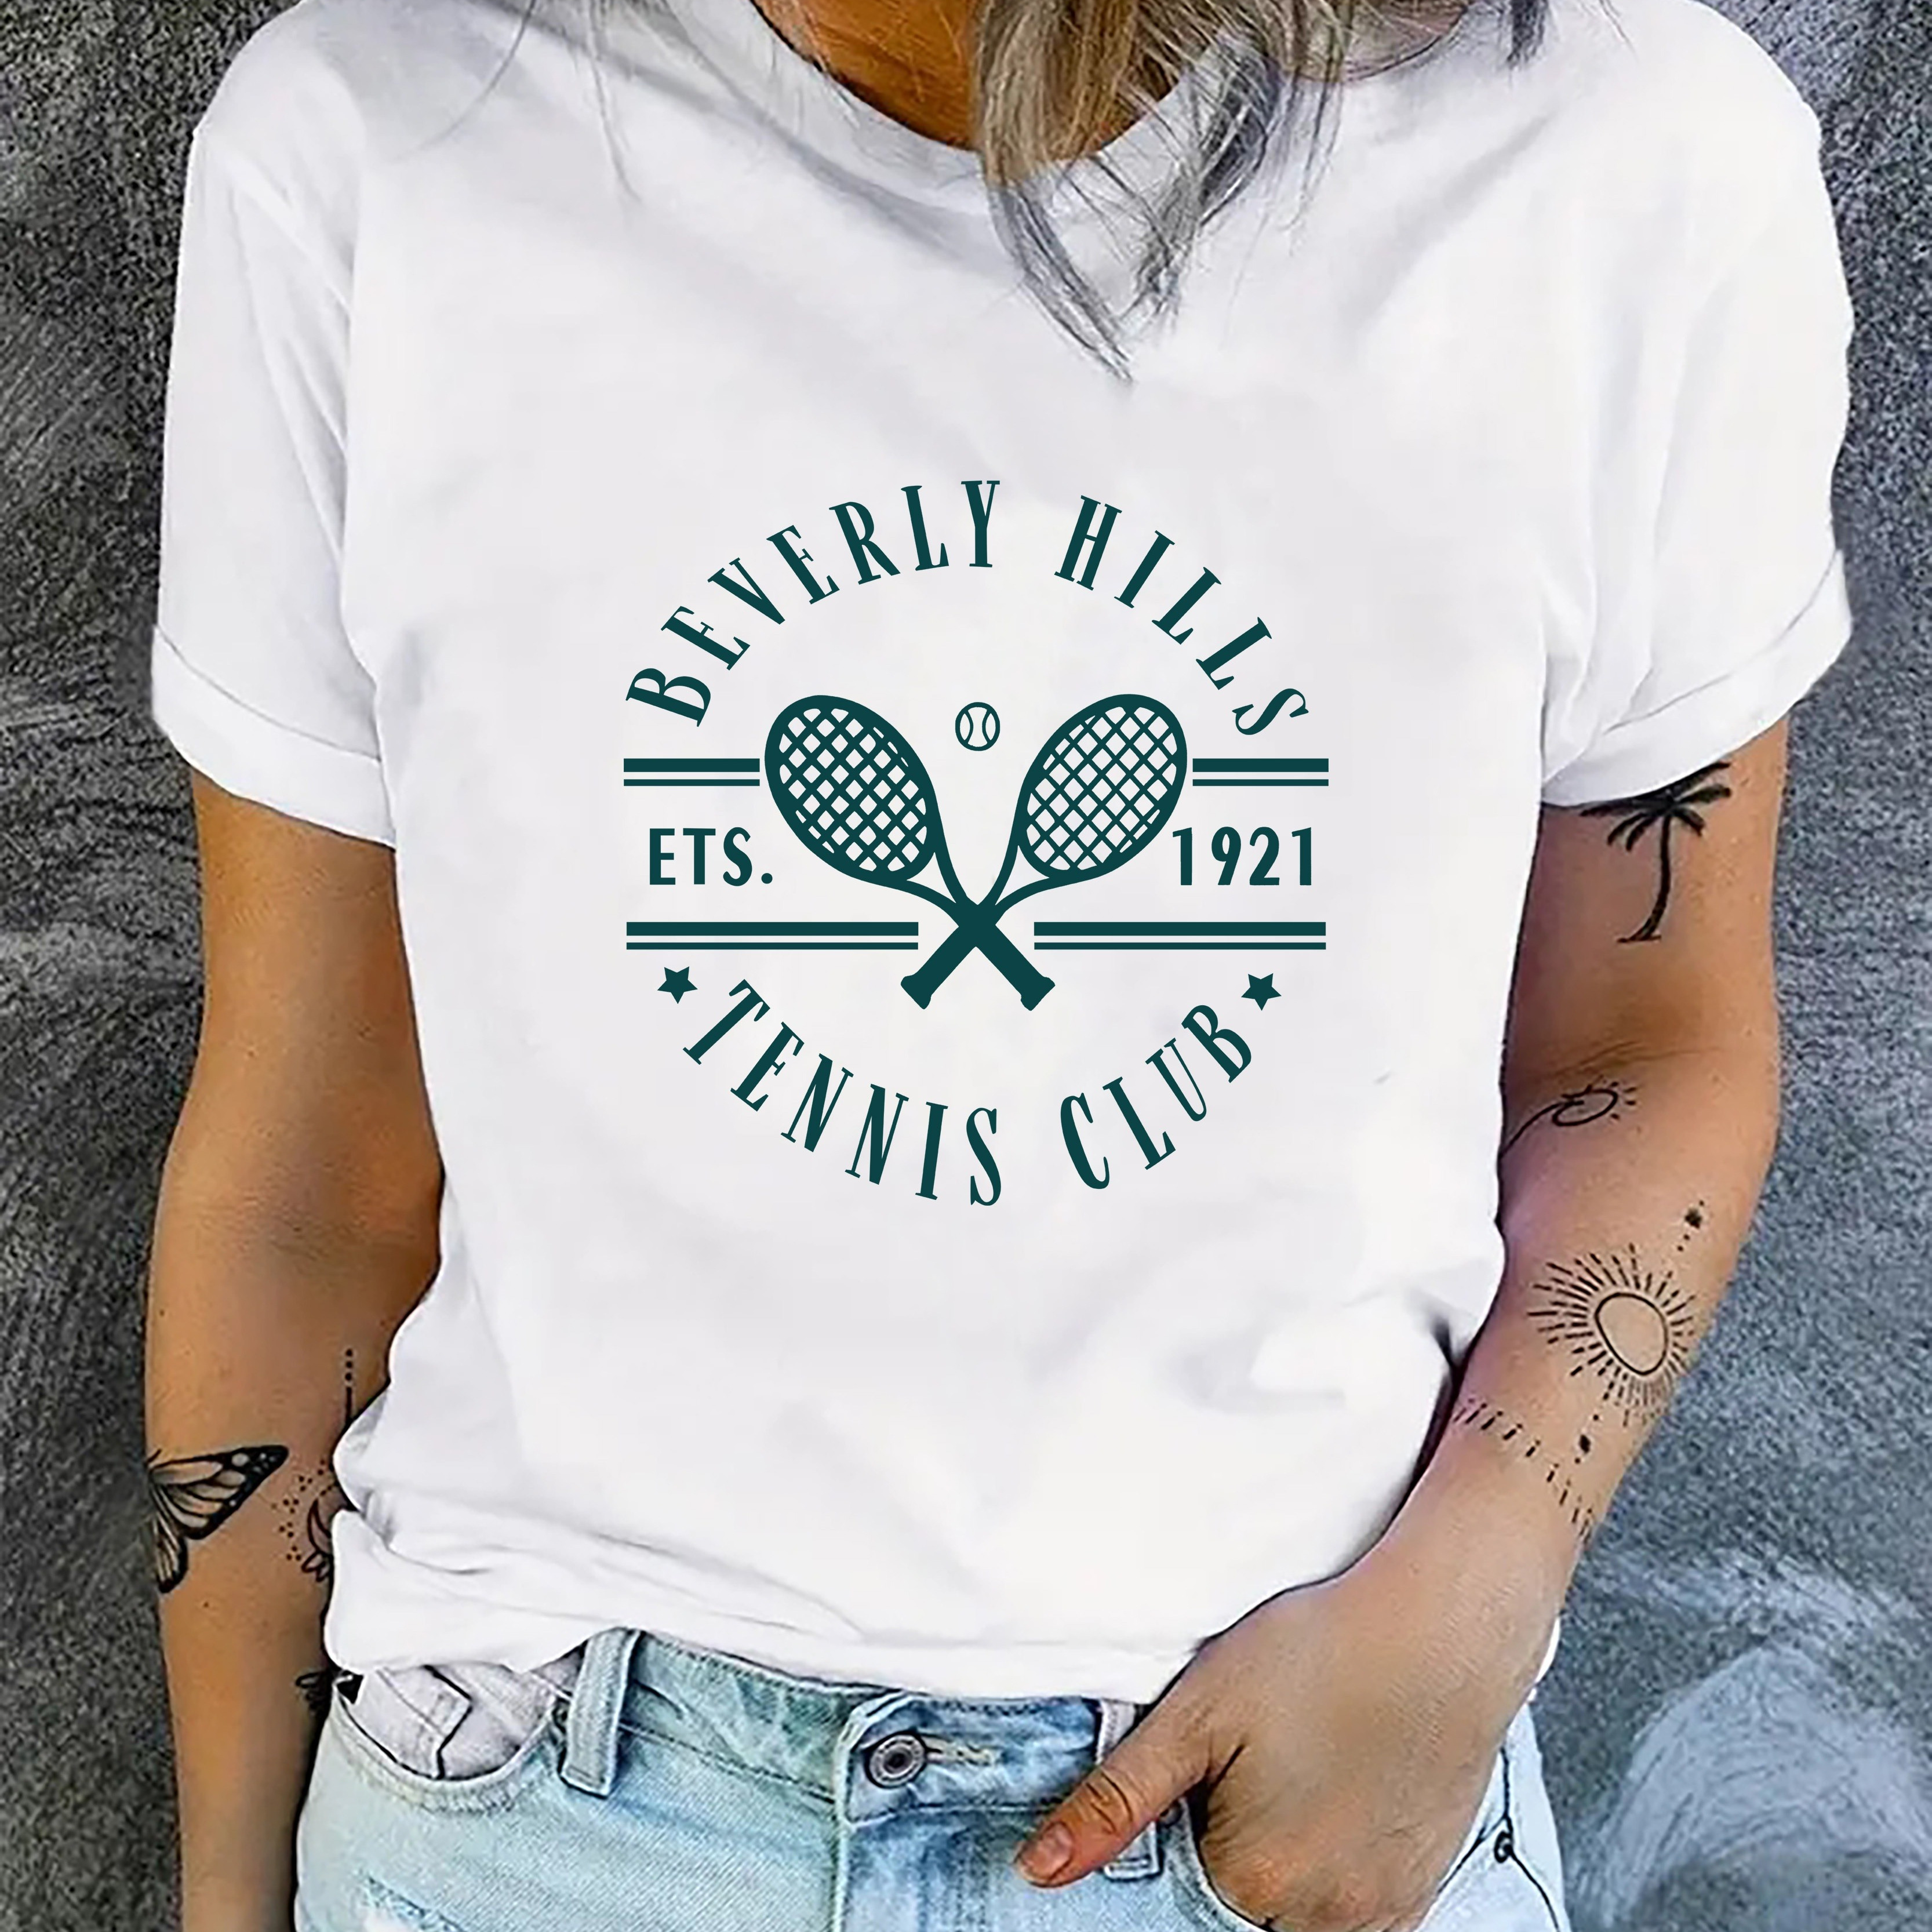 

Beverly Hills Tennis Club Print T-shirt, Casual Crew Neck Short Sleeve Top, Women's Clothing